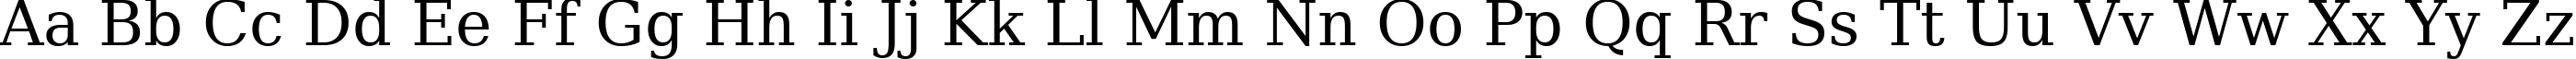 Пример написания английского алфавита шрифтом ae_Rehan